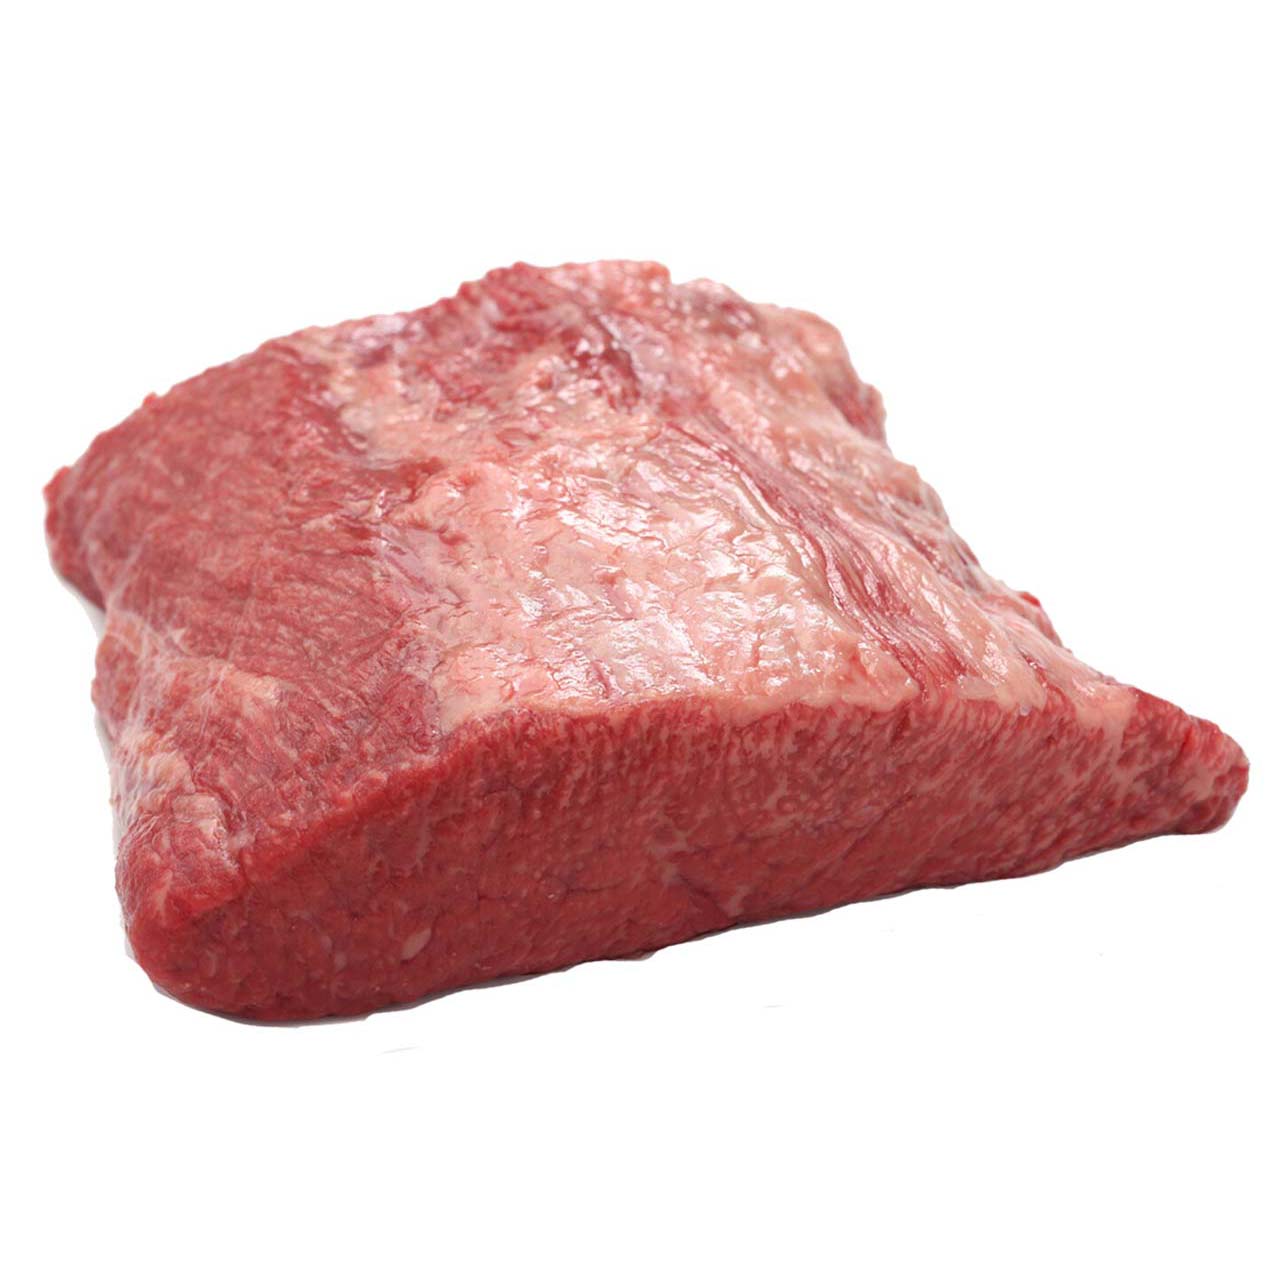 Beef Brisket Roast - Organic